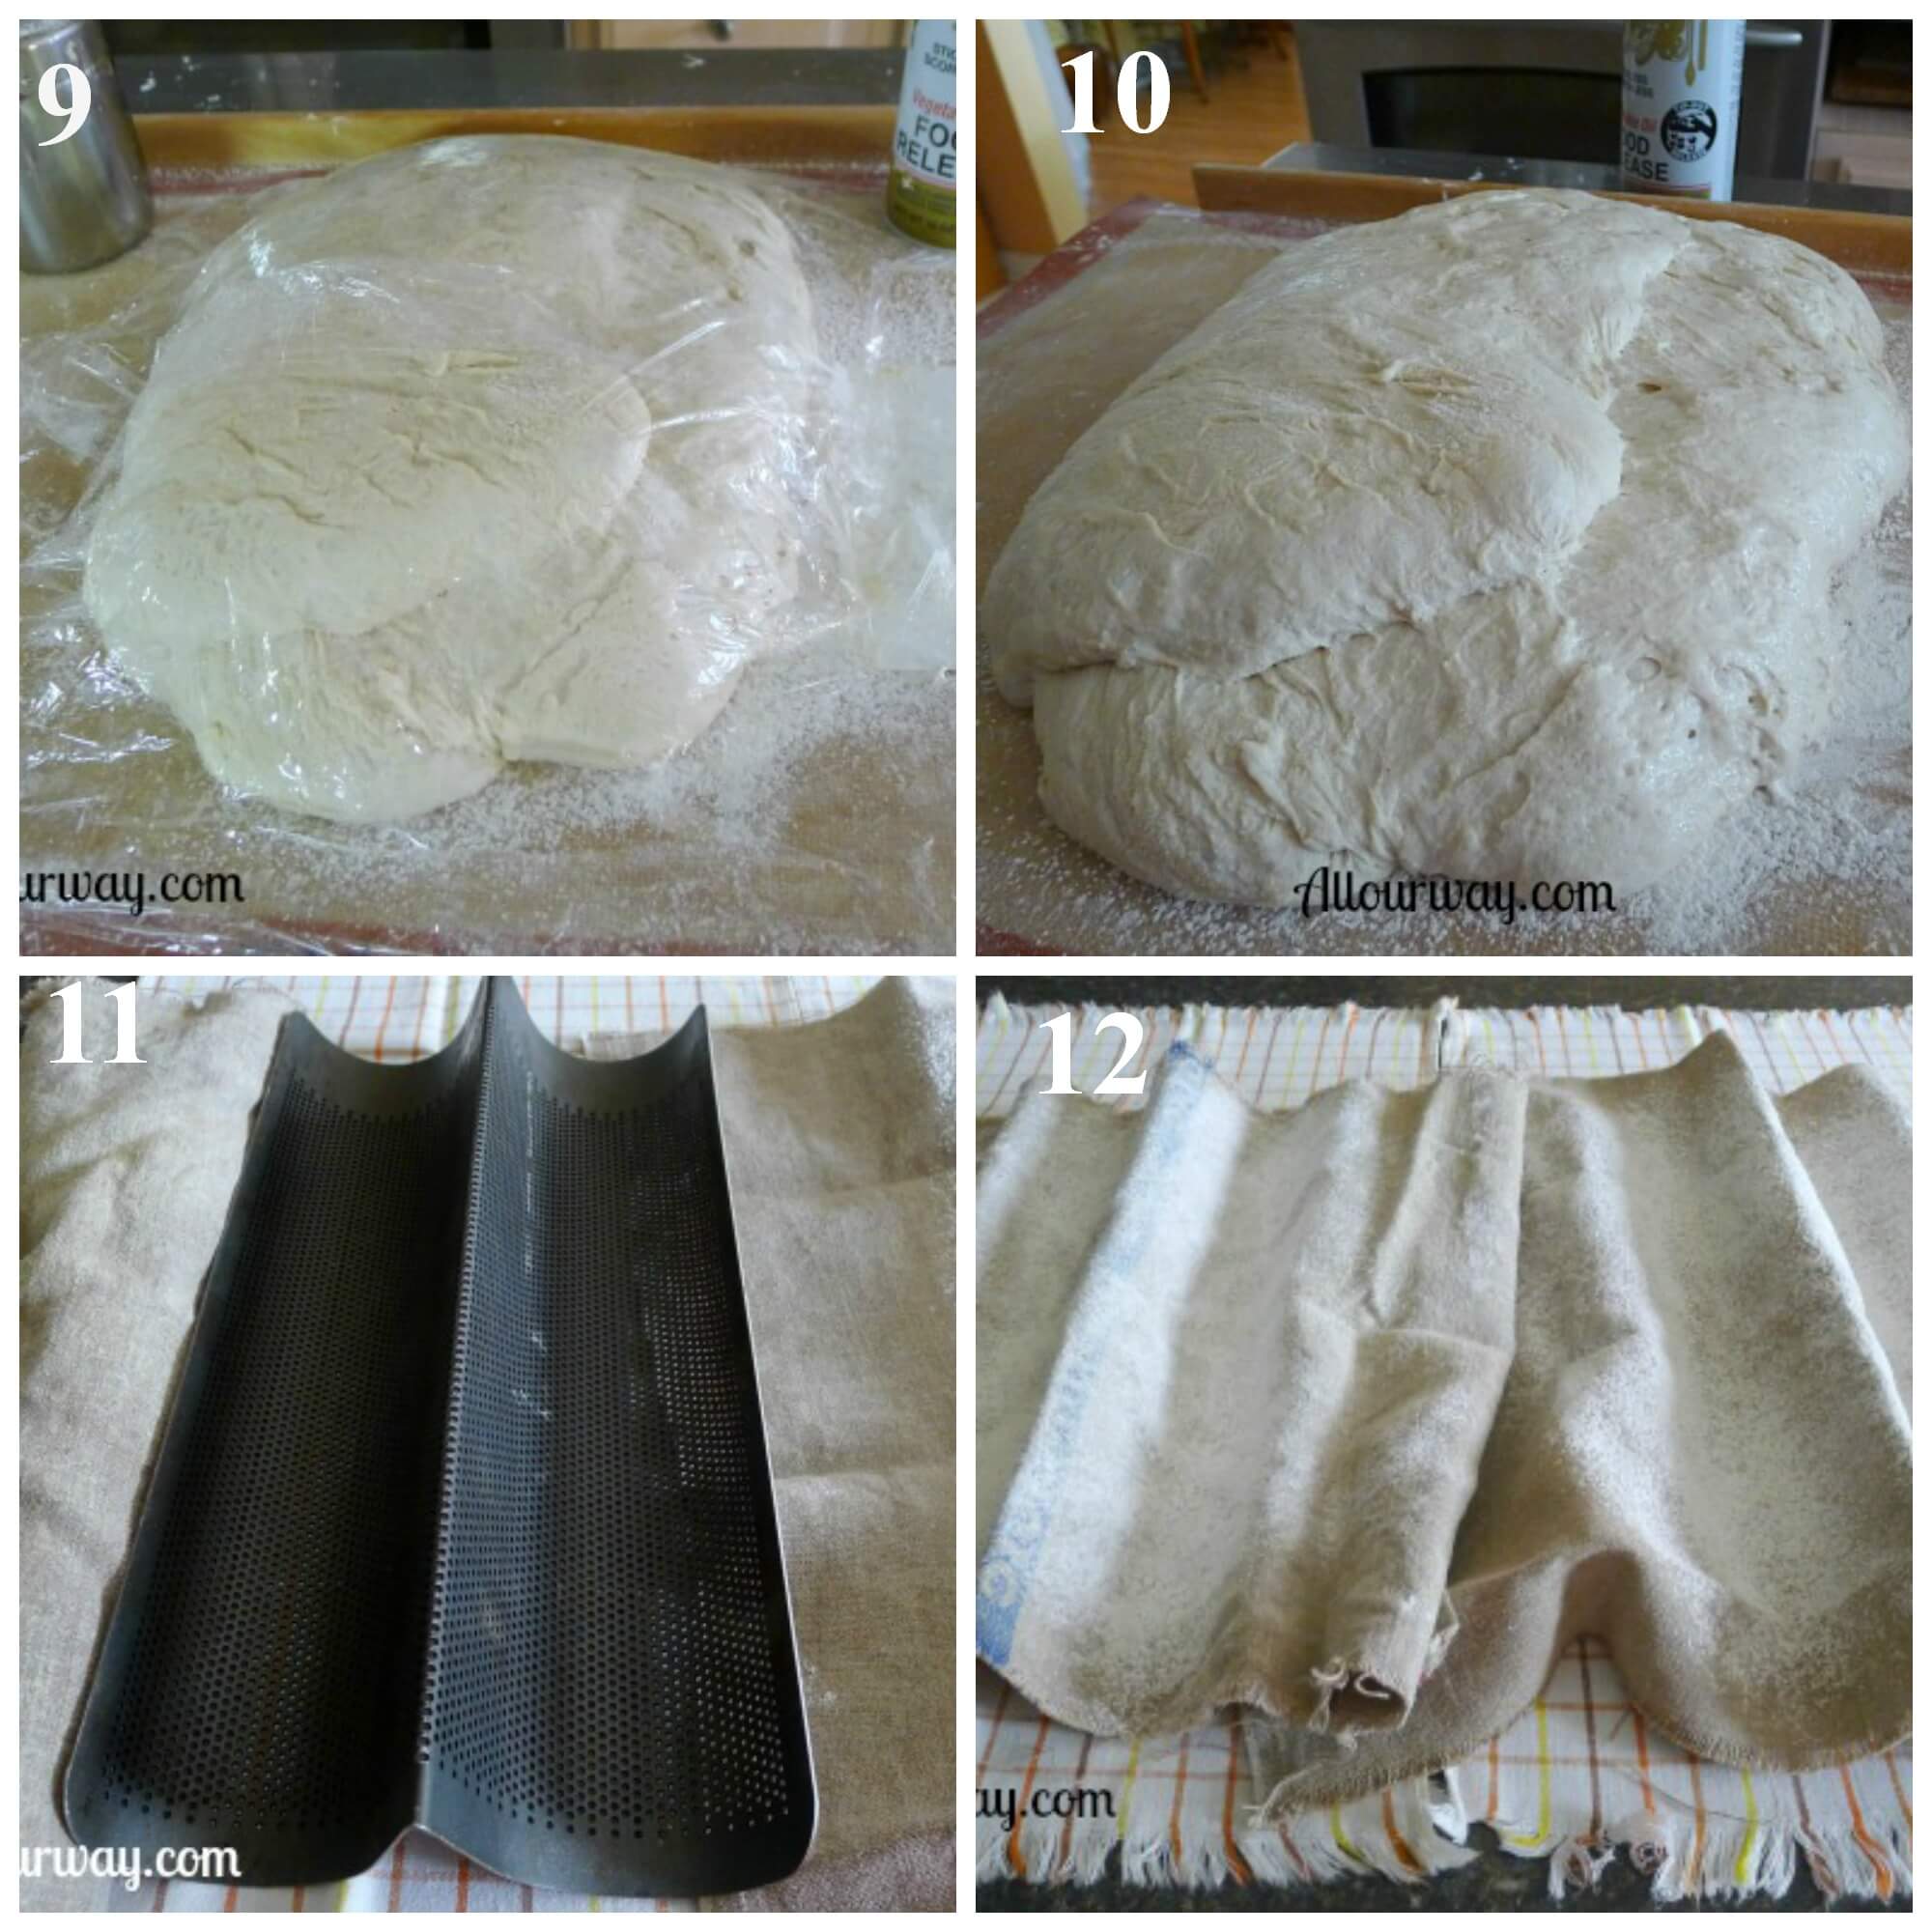 How to make Ciabatta Bread steps 9 - 12 at allourway.com